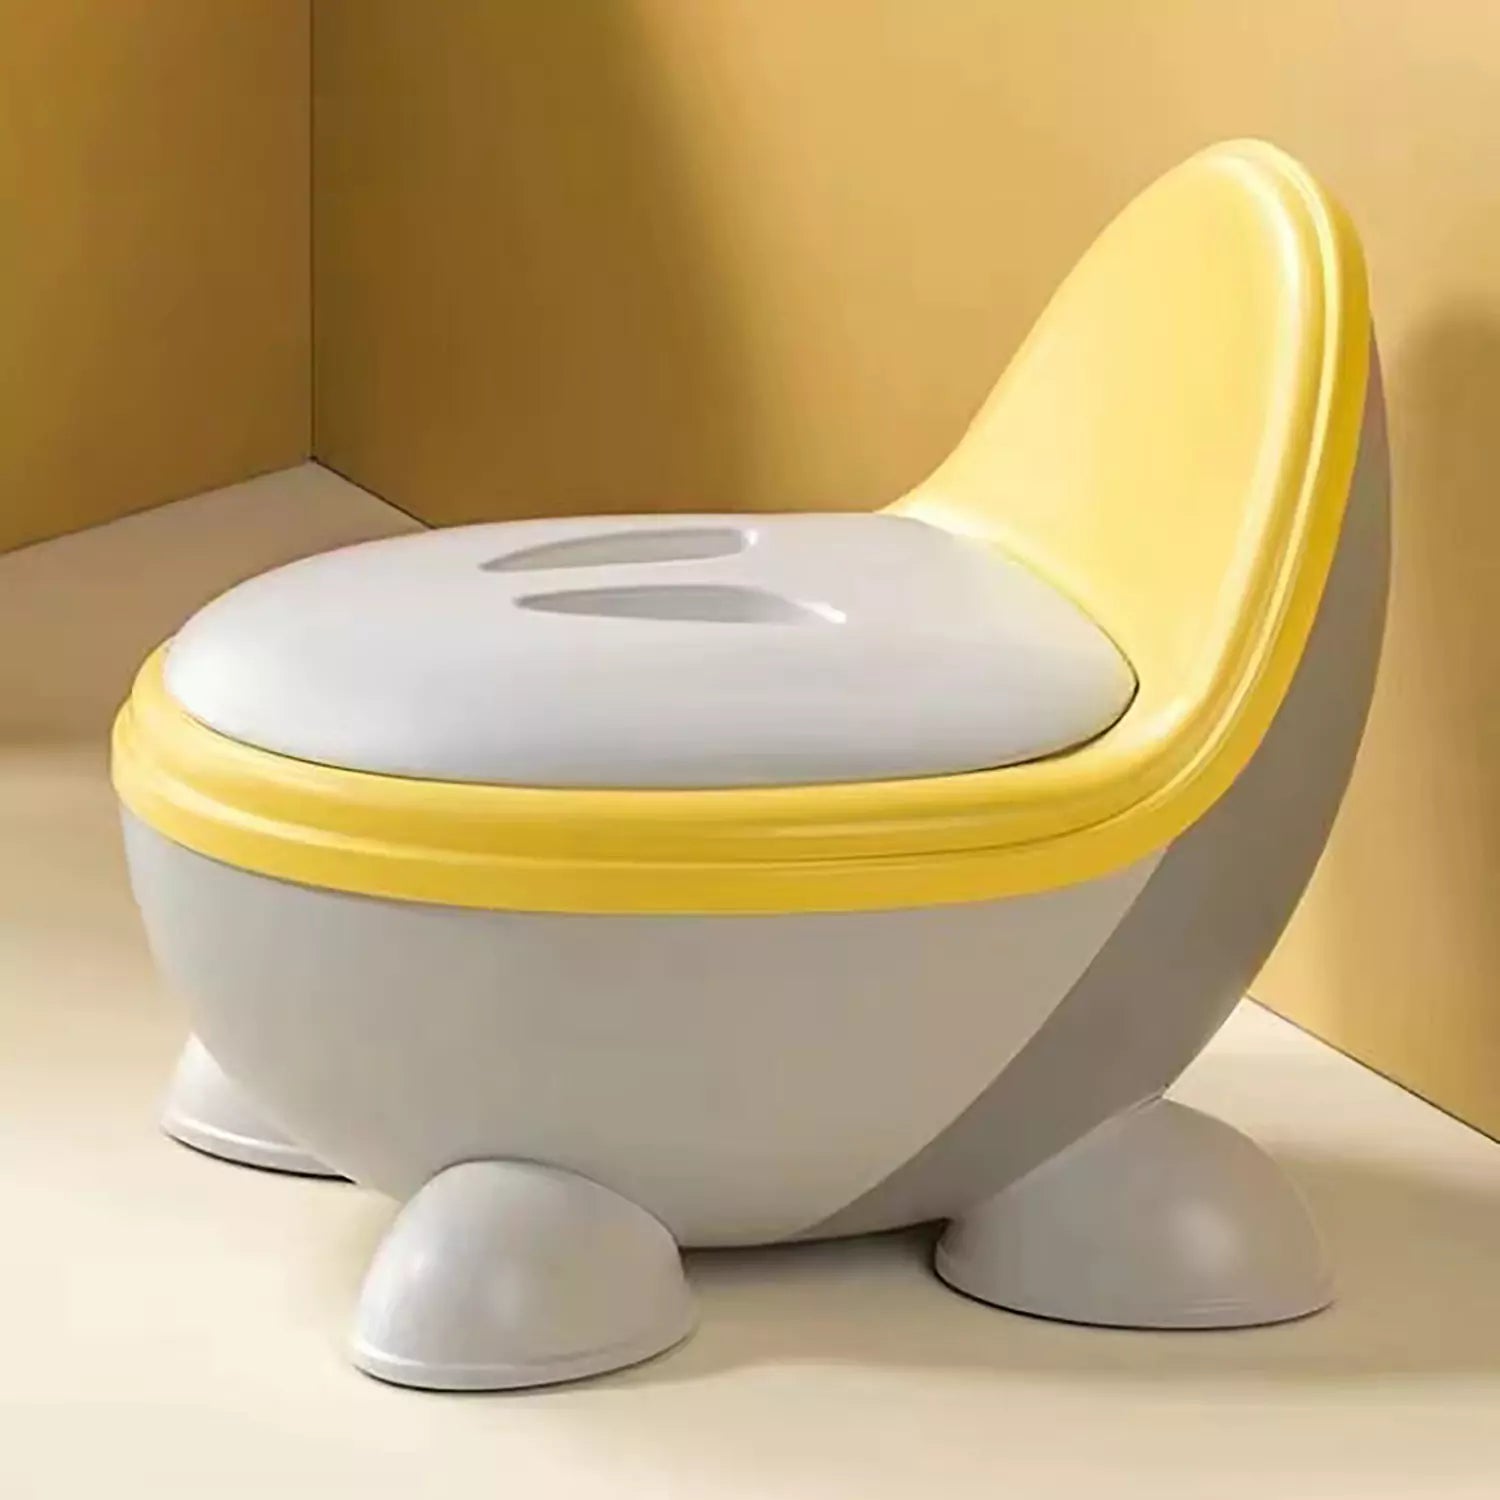 An image of Egg Shaped Stool & Portable Potty: Safe, Comfortable